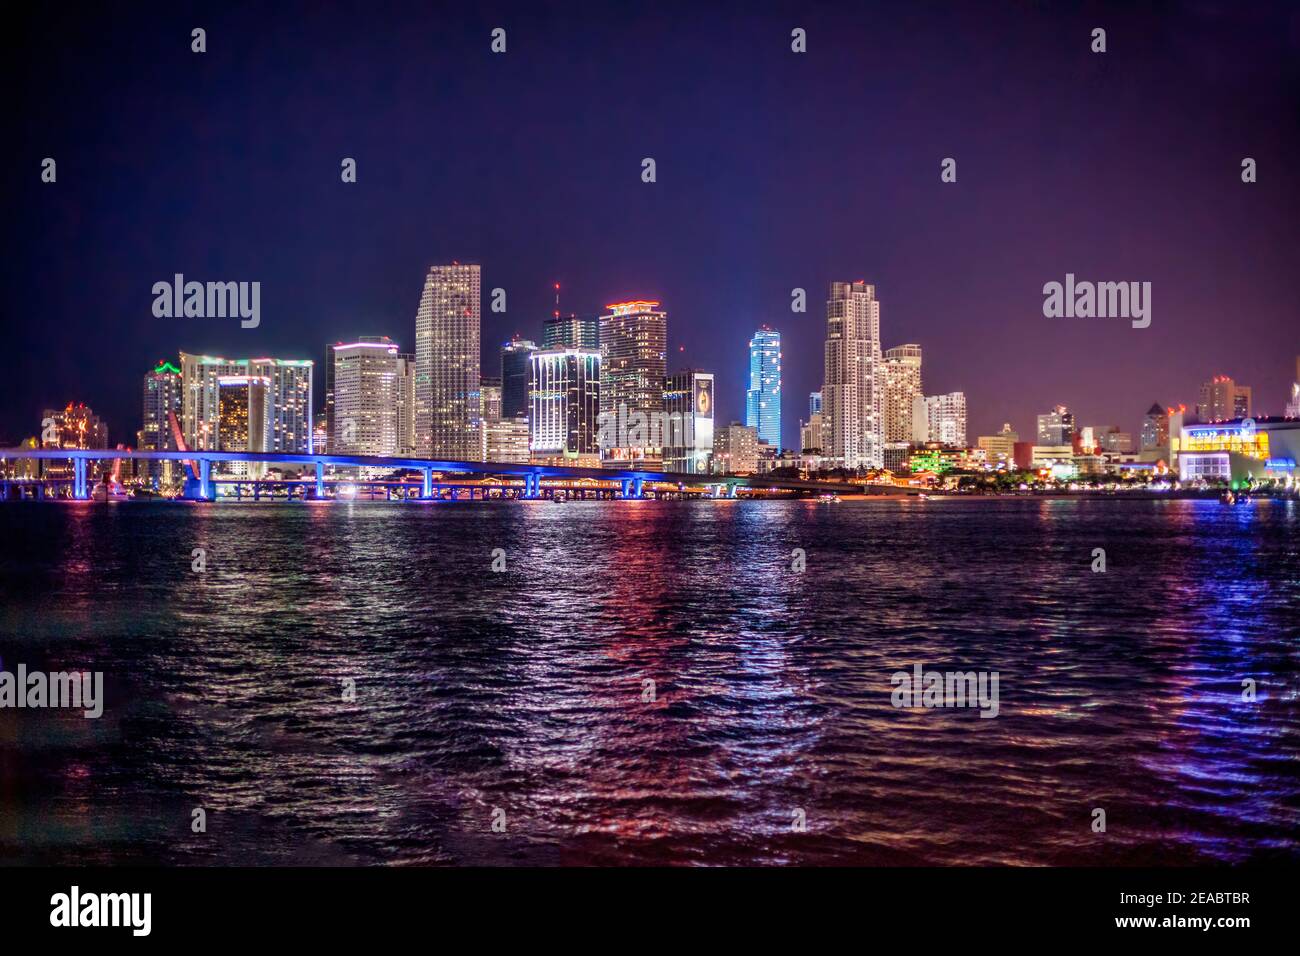 The nighttime Miami skyline seen from Watson Island on the MacArthur Causeway. Stock Photo